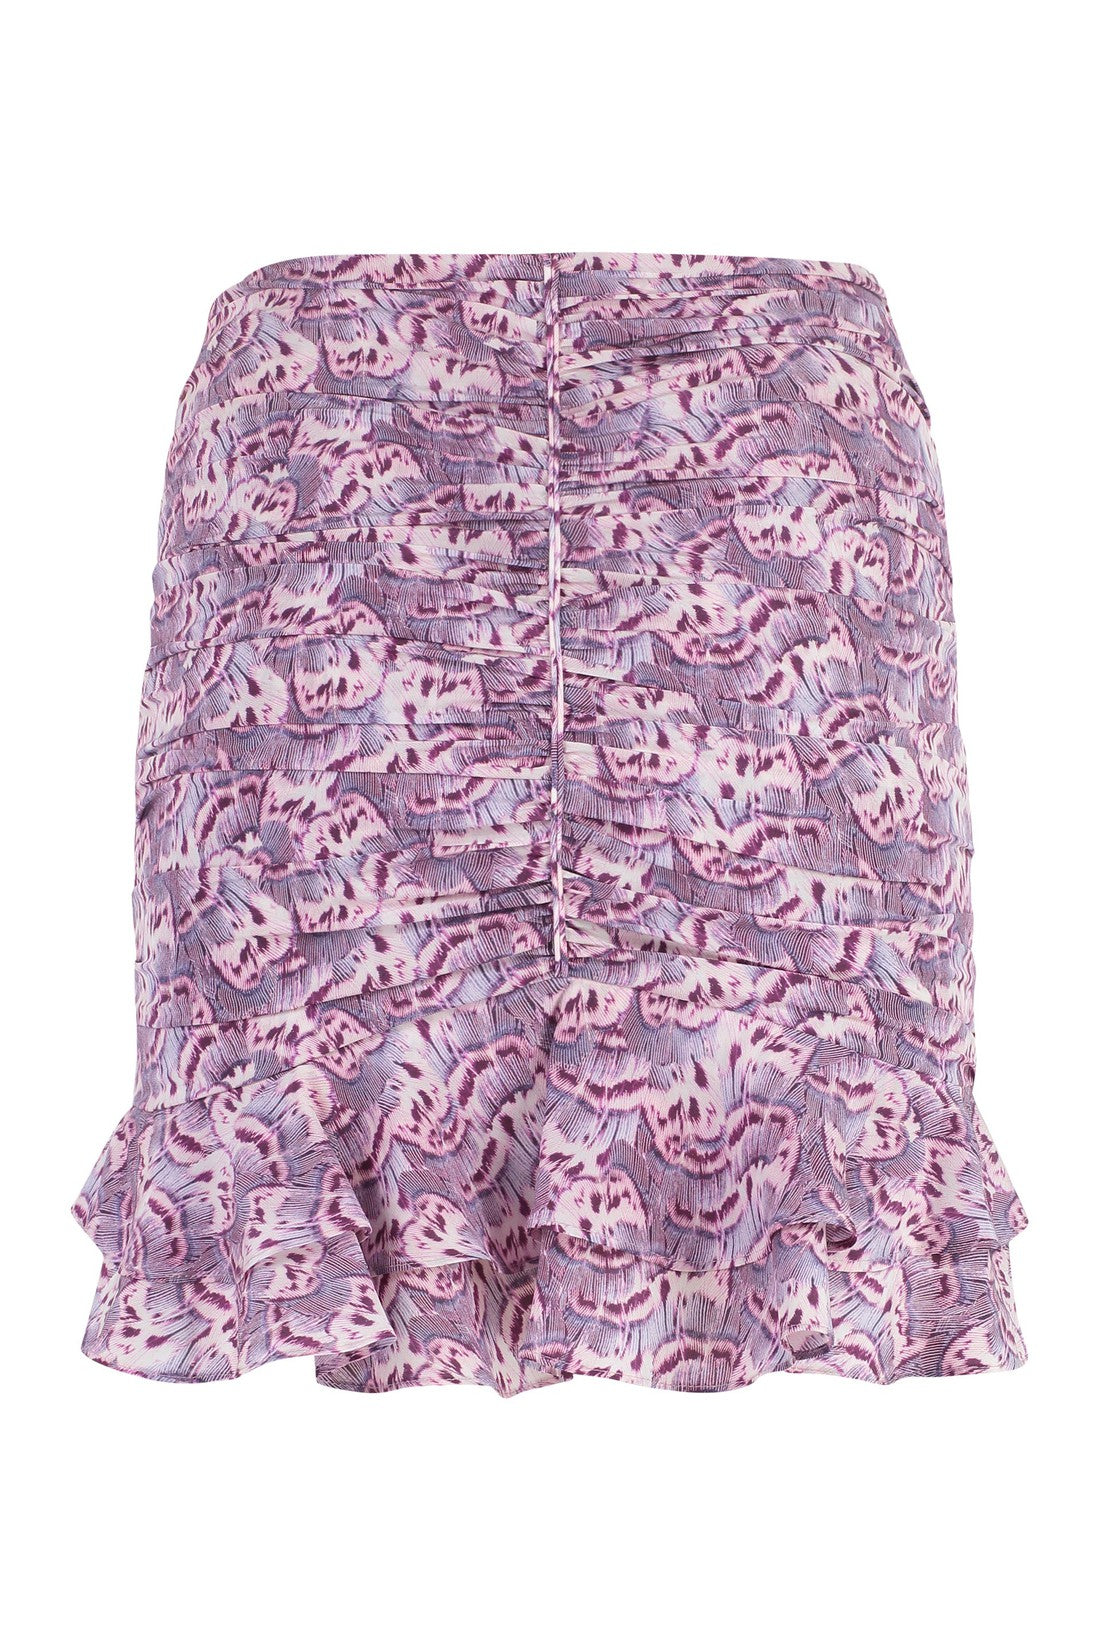 Isabel Marant-OUTLET-SALE-Milendi printed silk skirt-ARCHIVIST